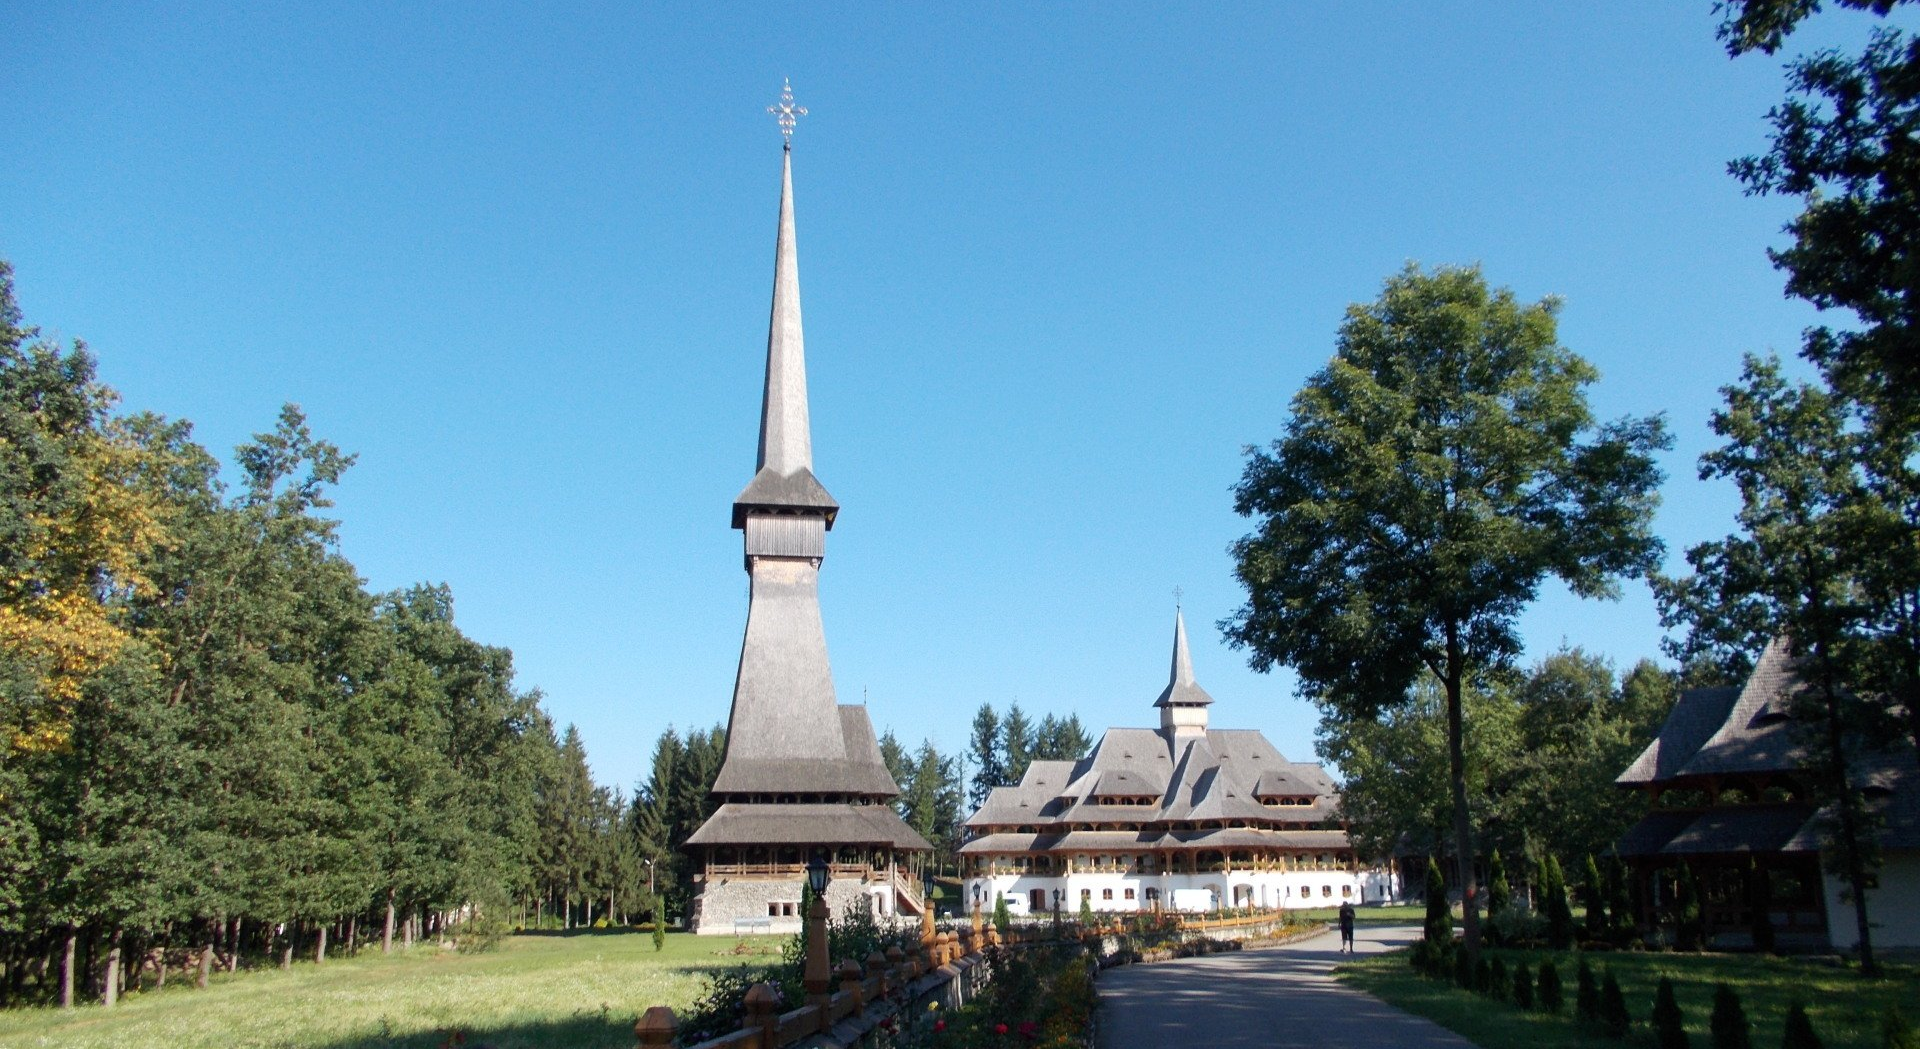 
World's tallest wooden church: Sapanta - Peri Monastery